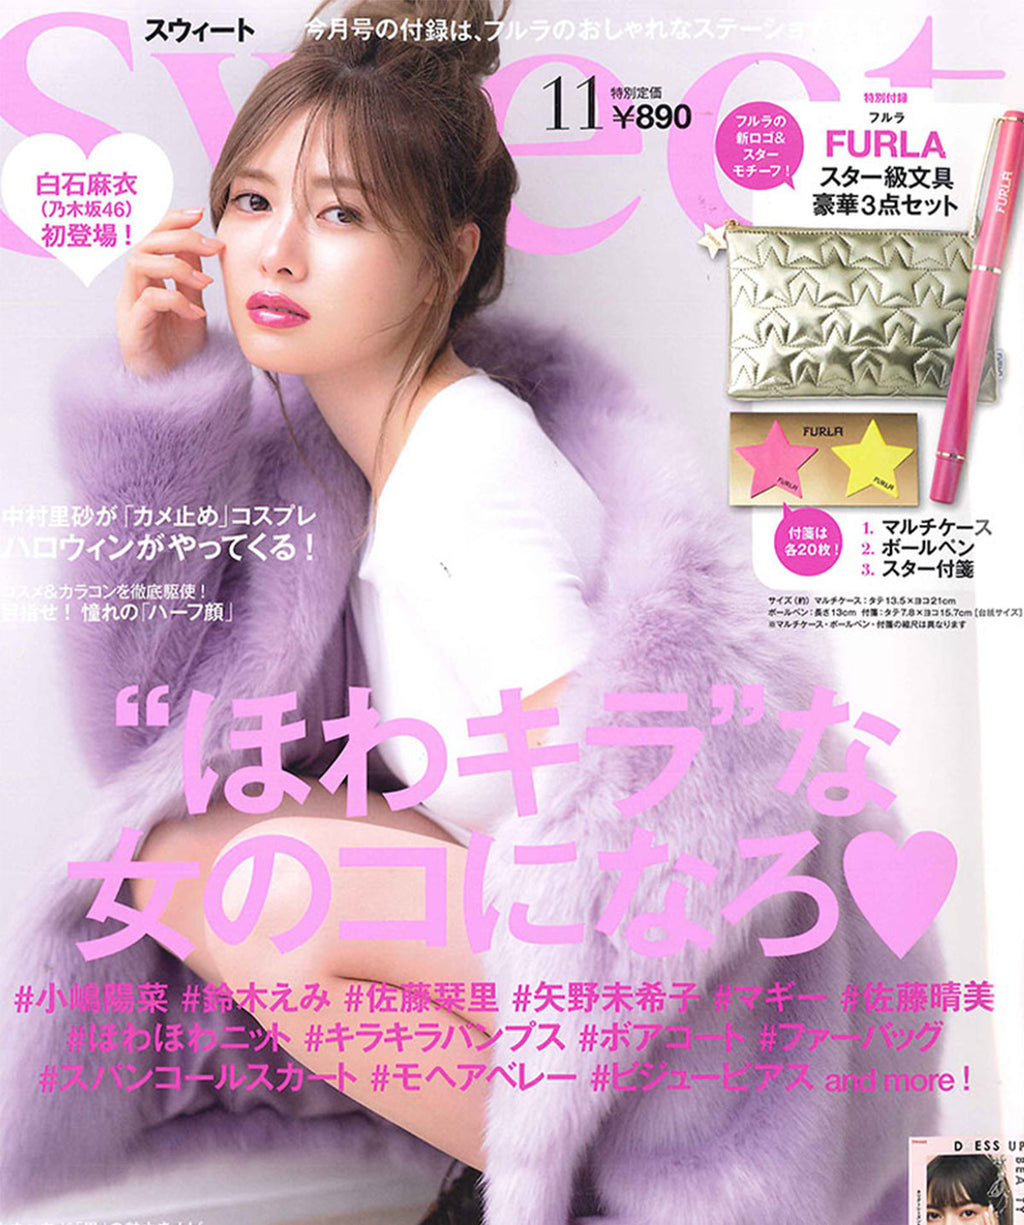 Sweet Magazine Cover